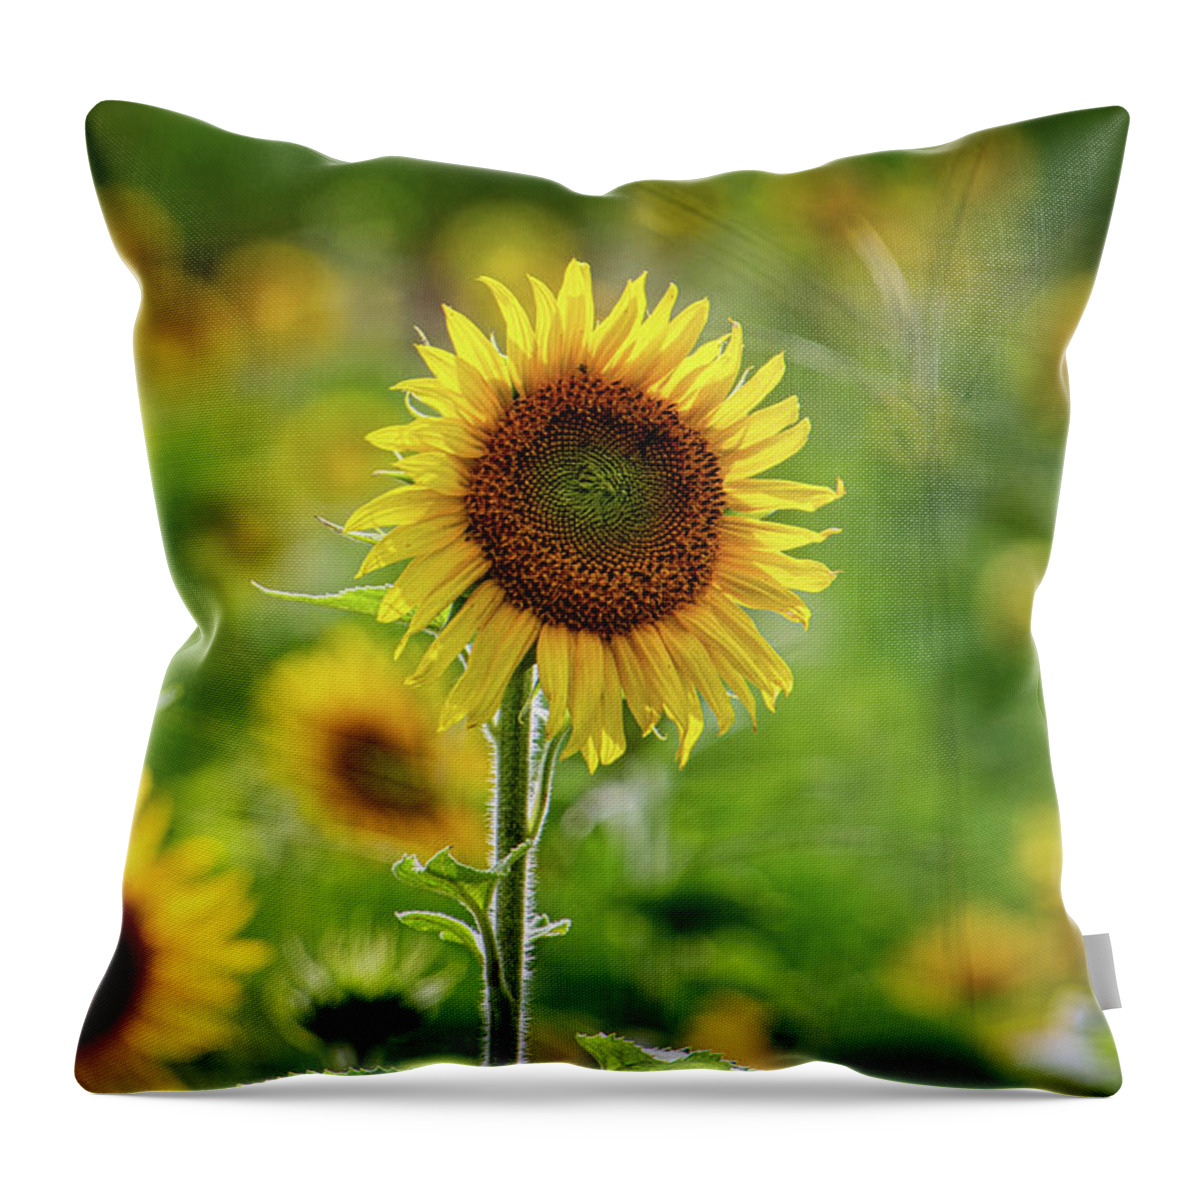 Sunflower Throw Pillow featuring the photograph Sunflower by Randy Bayne